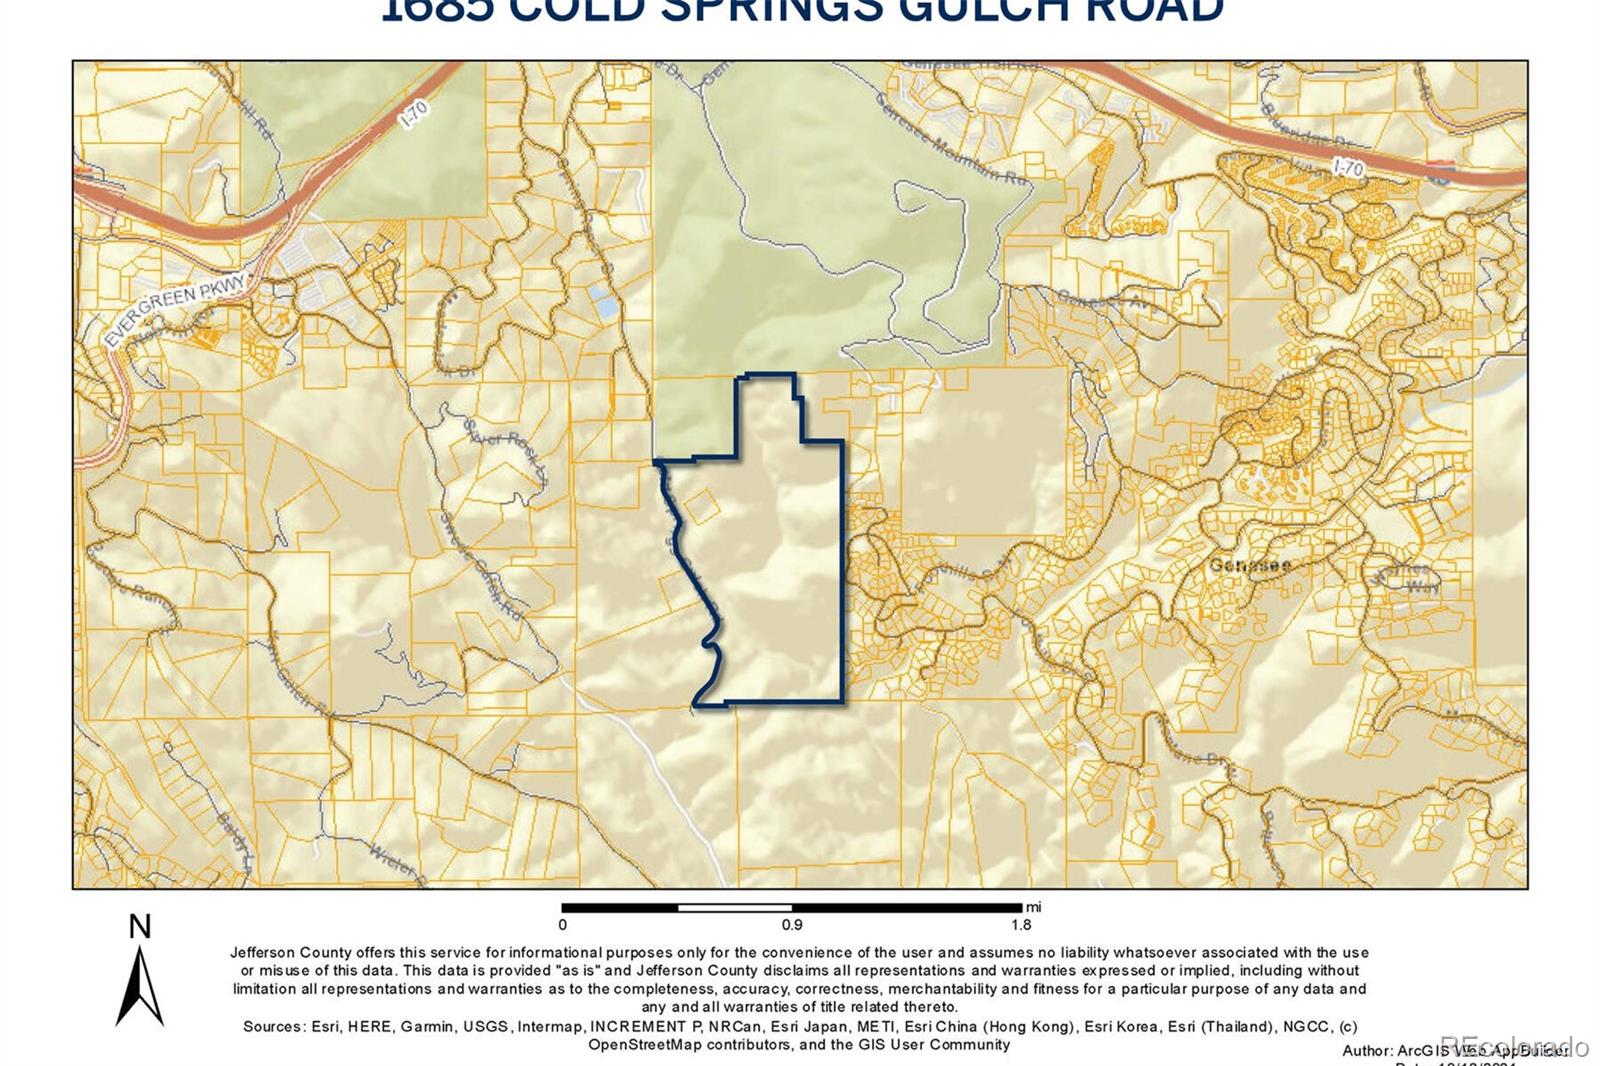 1685 Cold Springs Gulch, Golden, CO